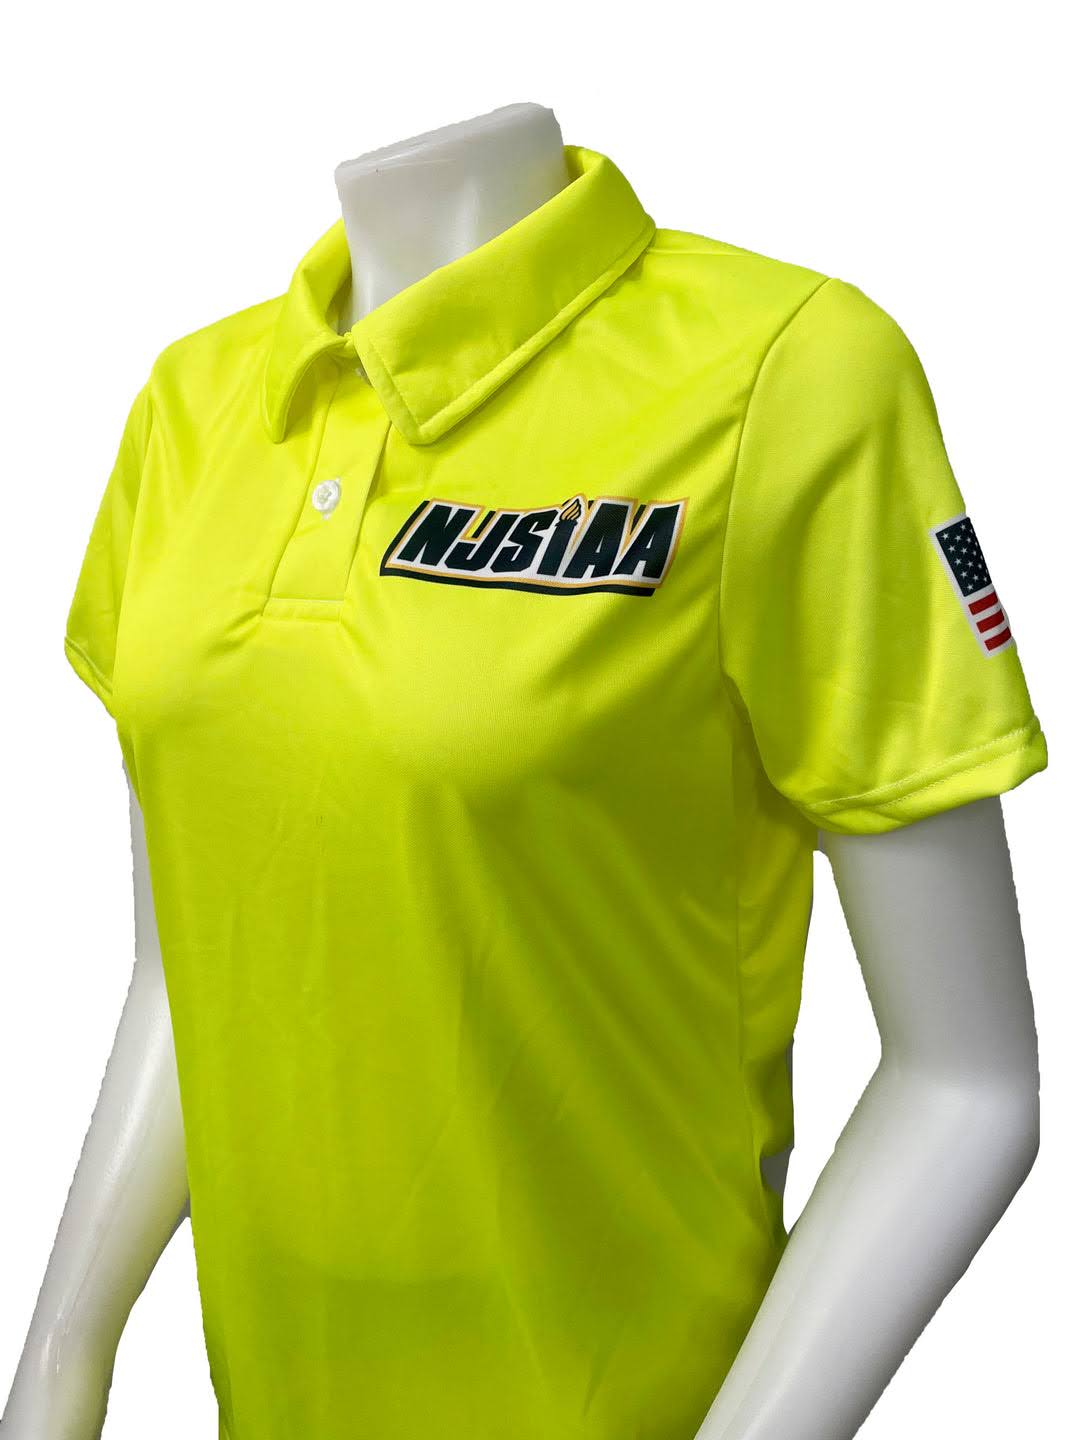 USA602NJ-FY - Smitty NJSIAA Women's Field Hockey Short Sleeve Shirt